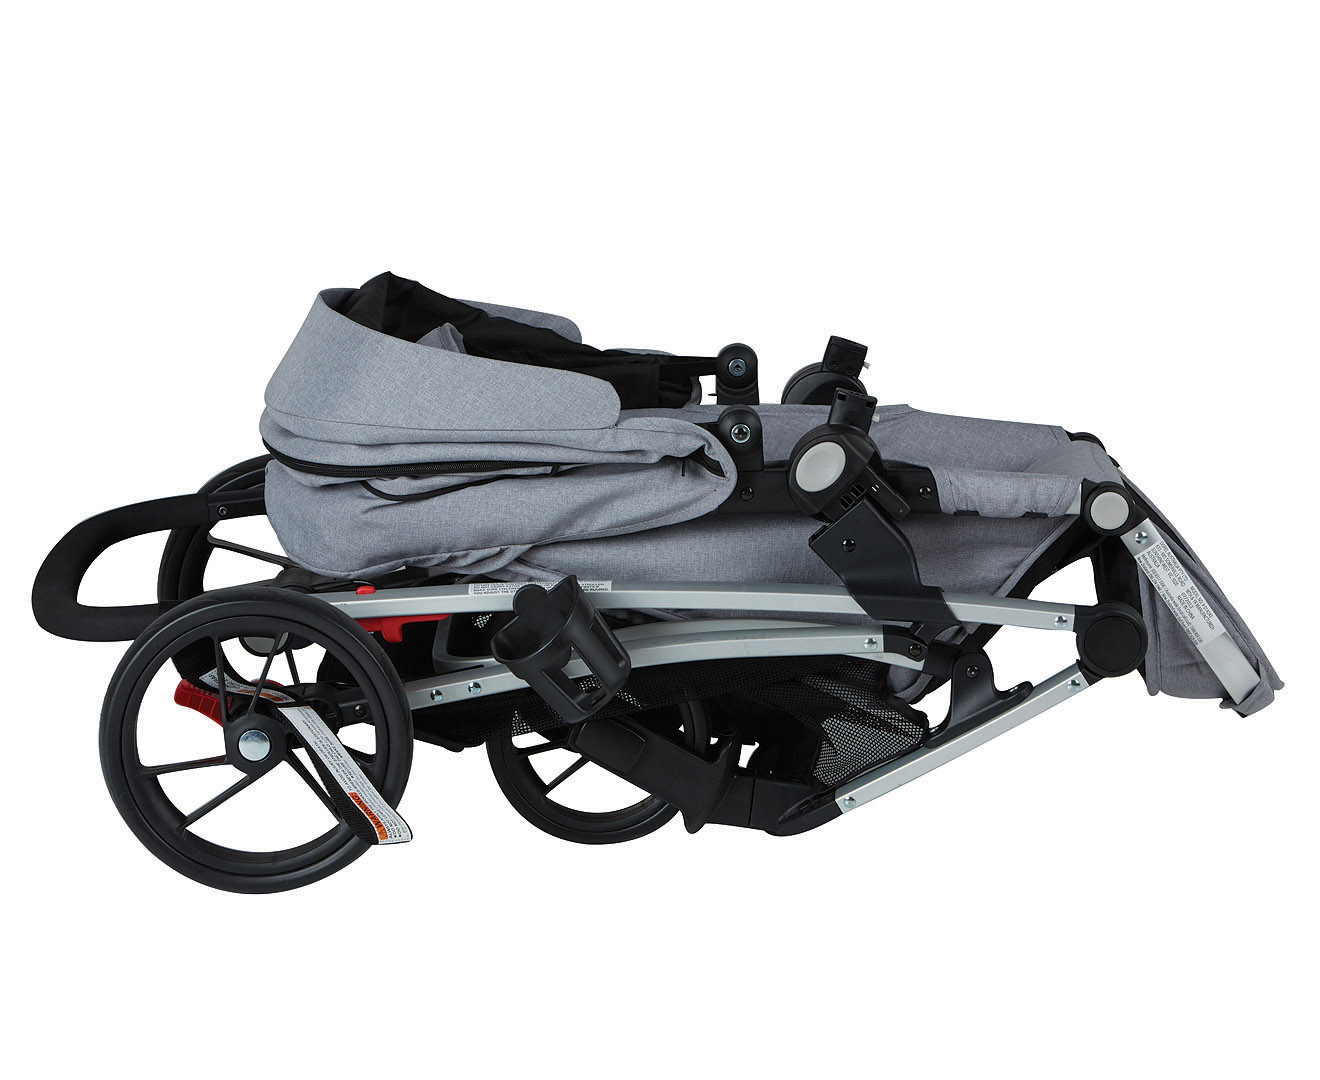 mother's choice grace 4 wheel stroller